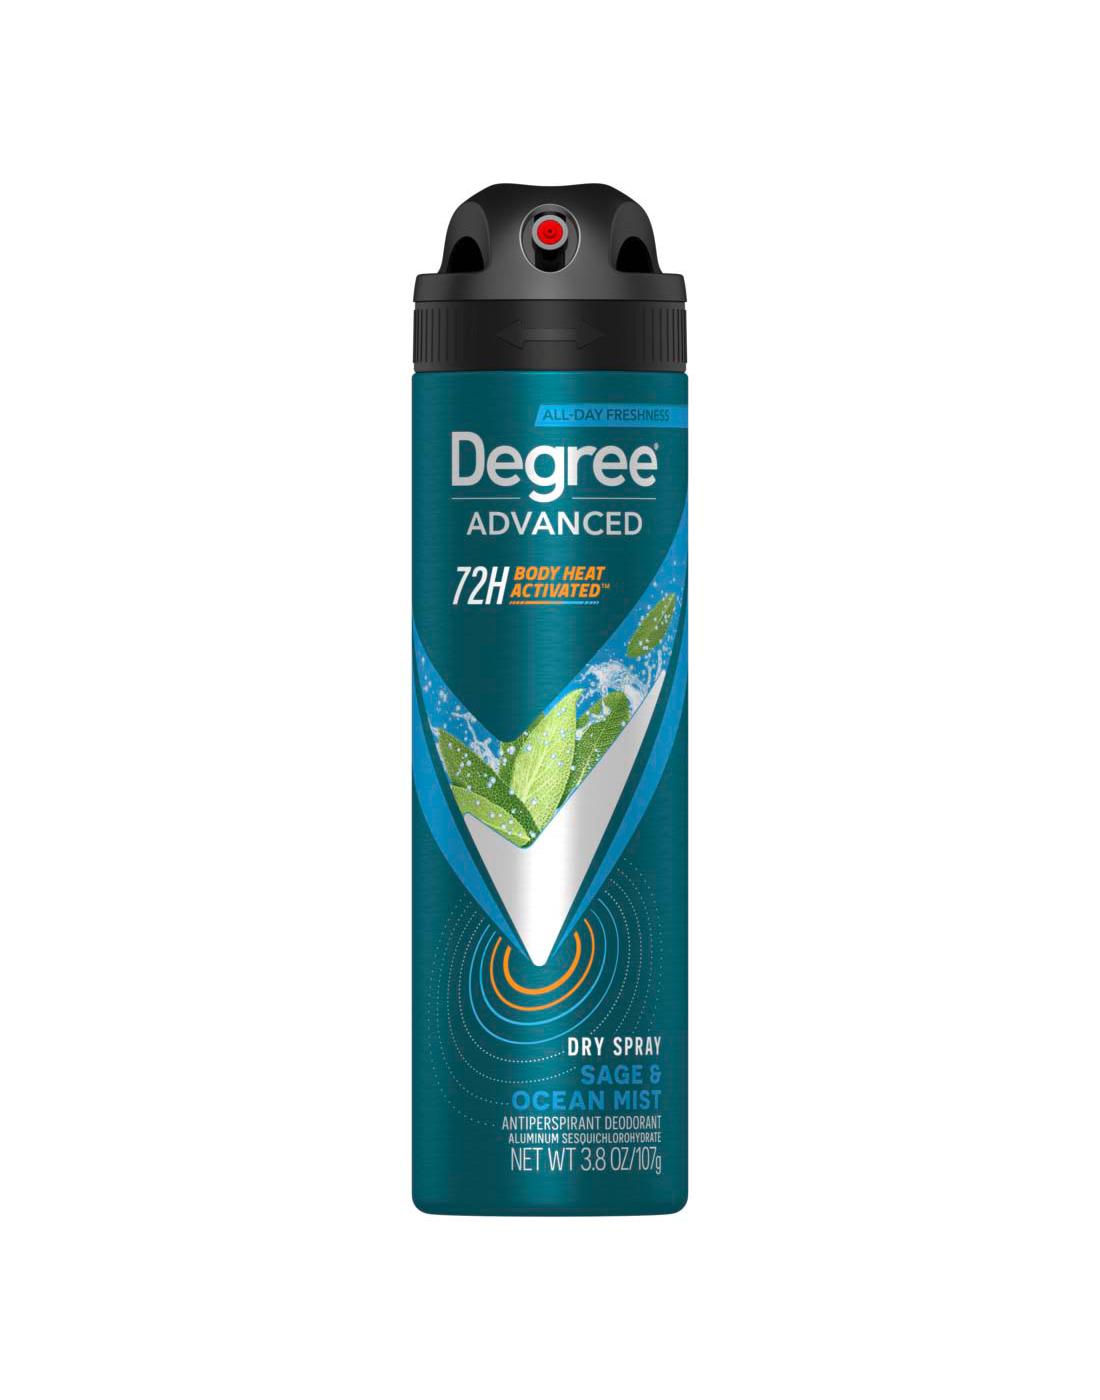 Degree Advanced Antiperspirant Deodorant Dry Spray  - Sage & Ocean Mist; image 3 of 3